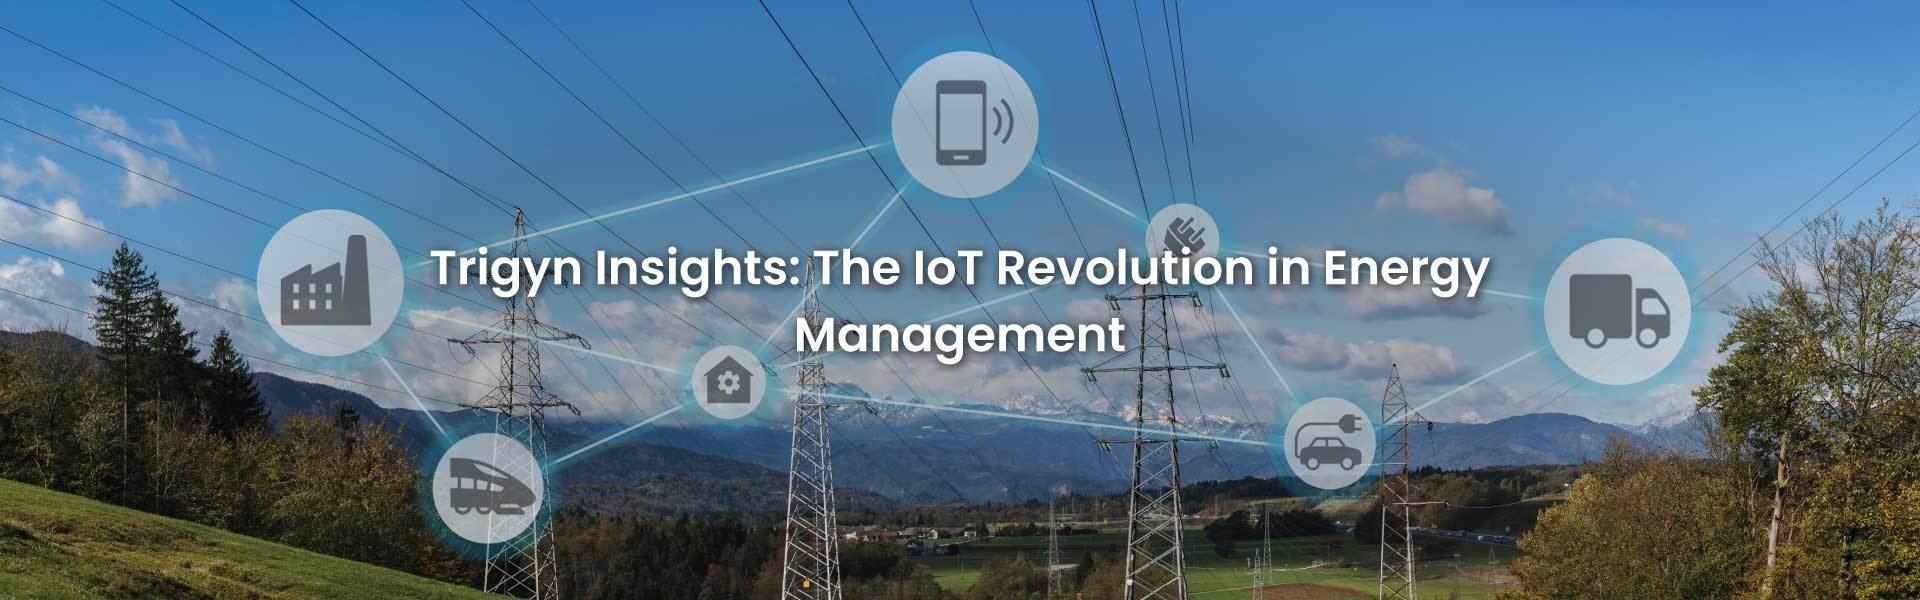 IoT Revolution in Energy Management